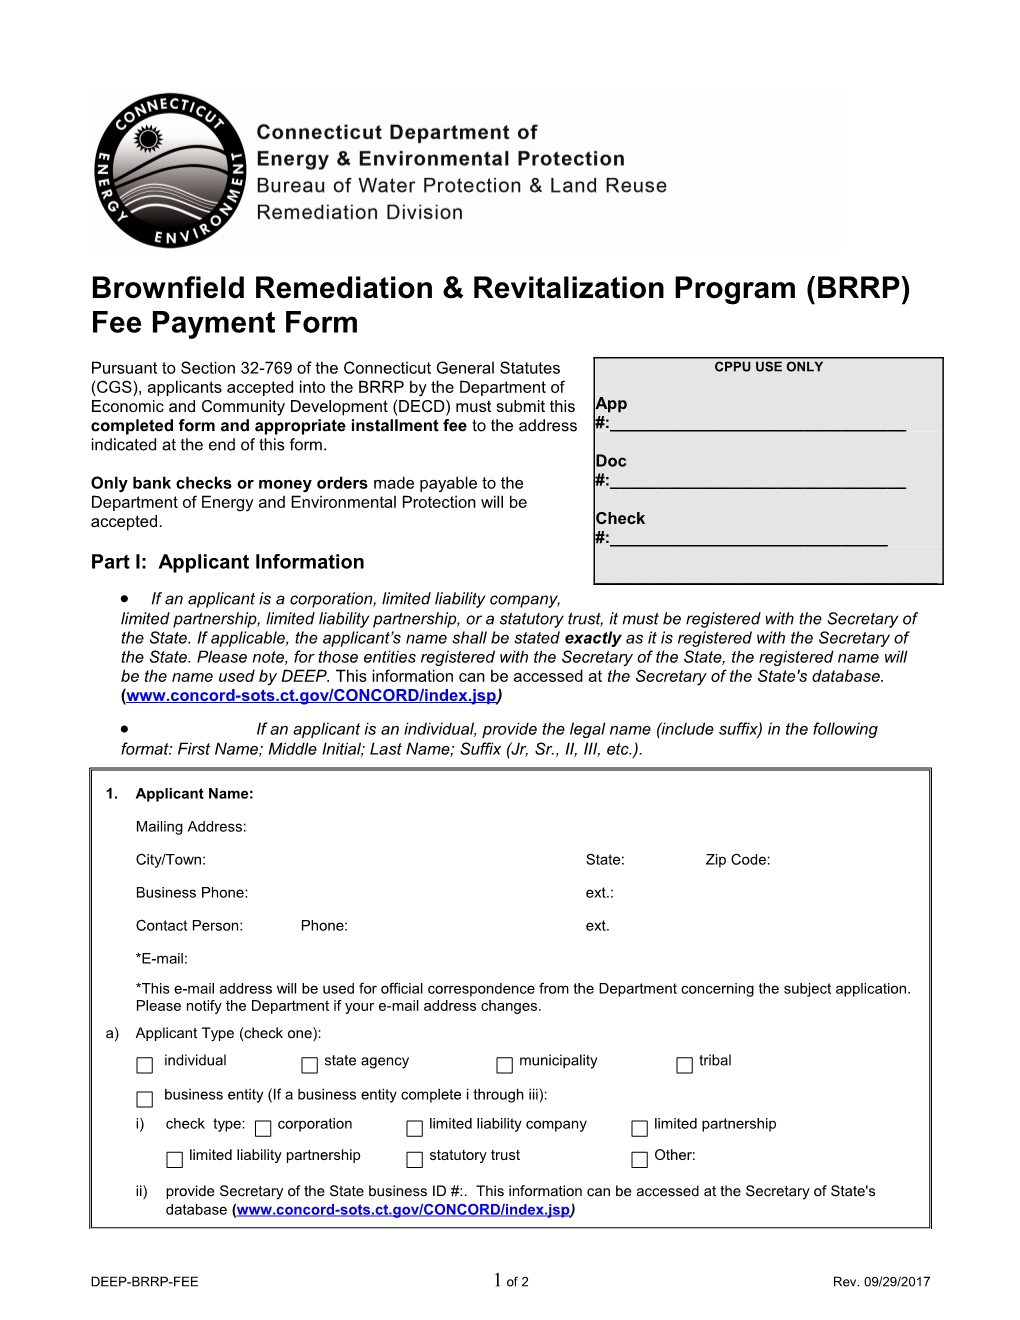 Brownfield Remediation & Revitalization Program (BRRP) Fee Payment Form